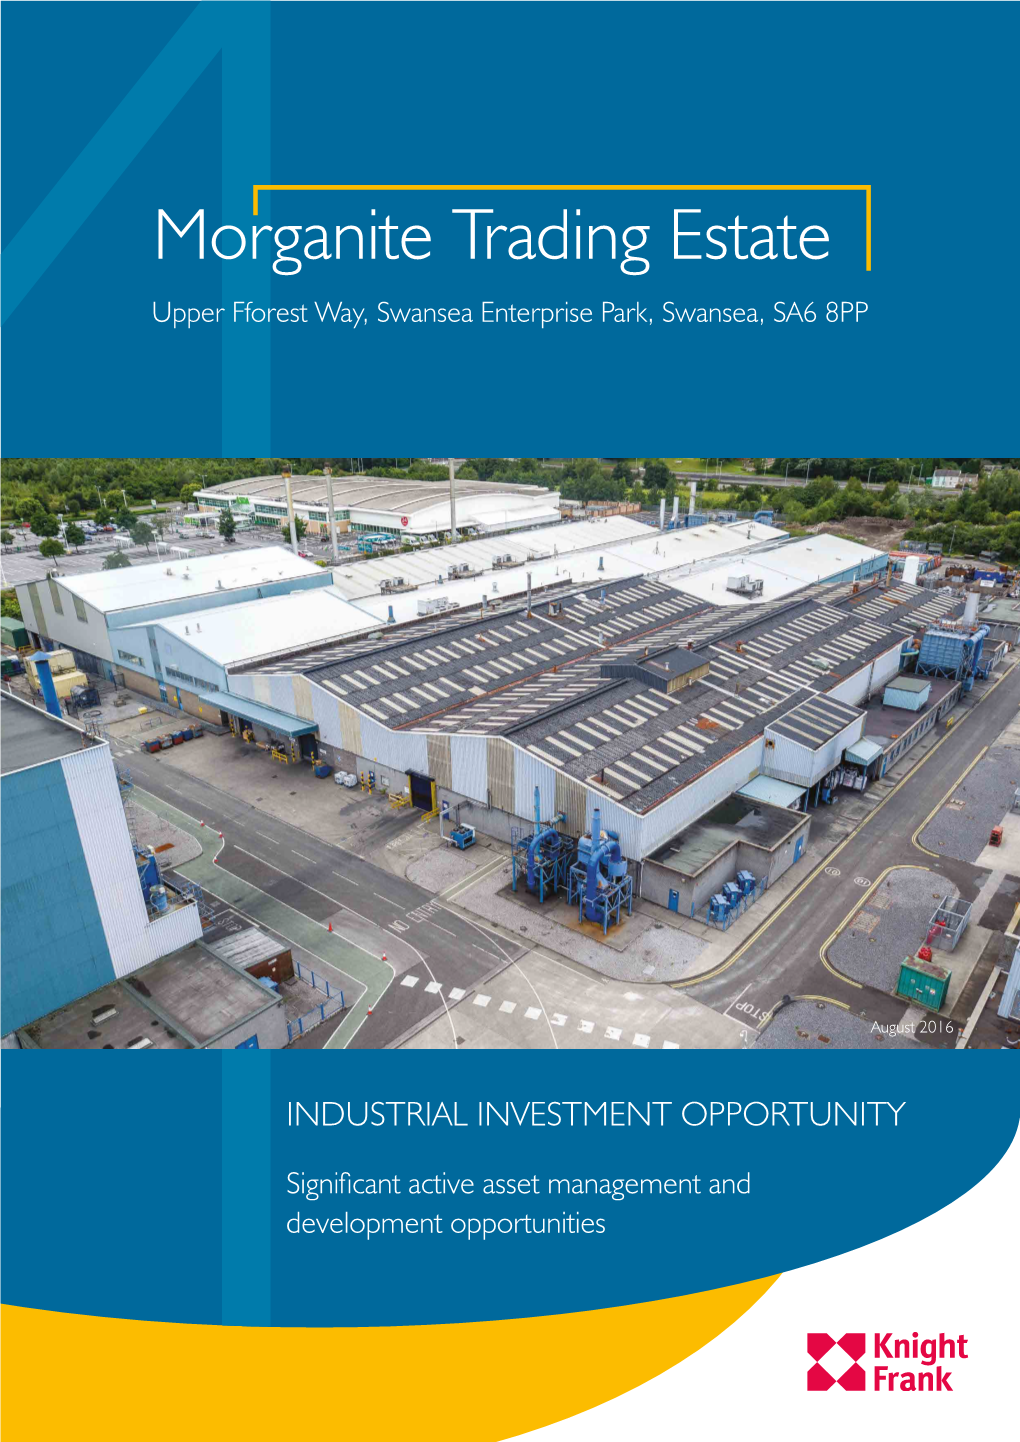 Morganite Trading Estate Upper Fforest Way, Swansea Enterprise Park, Swansea, SA6 8PP